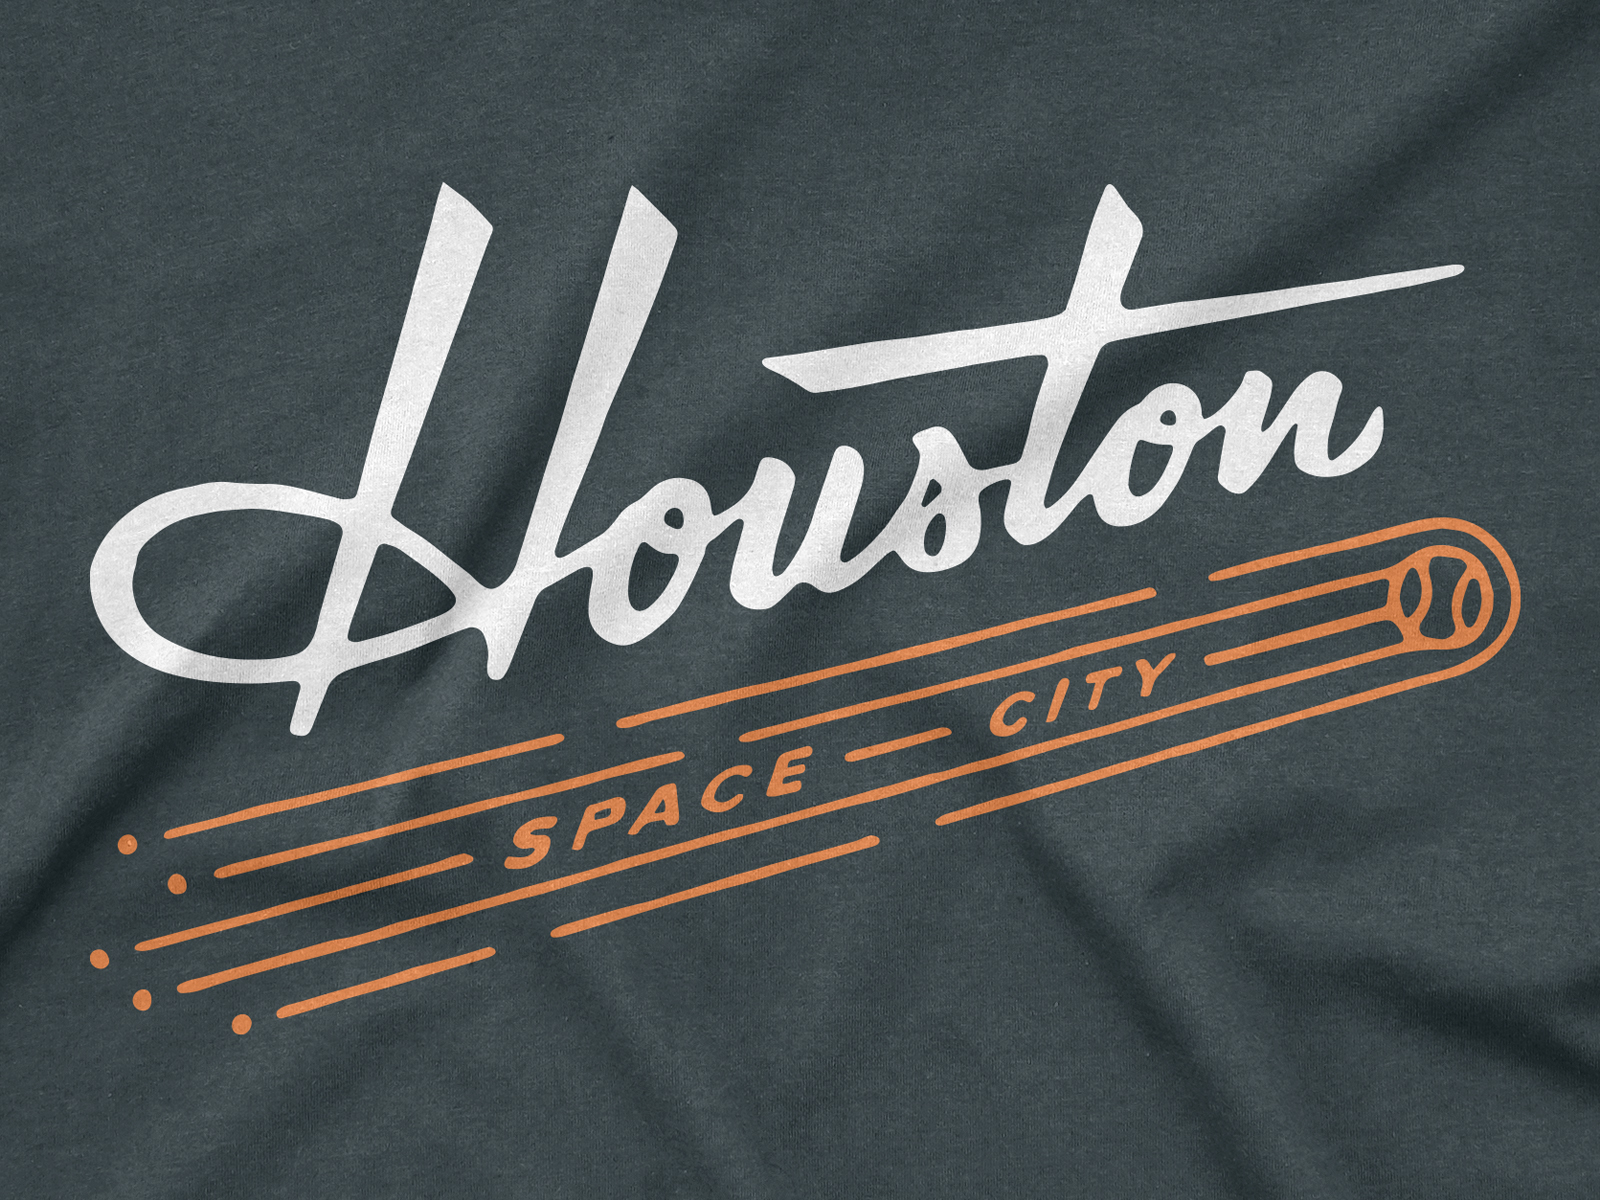 Houston (Space City) by Brandon Scott on Dribbble